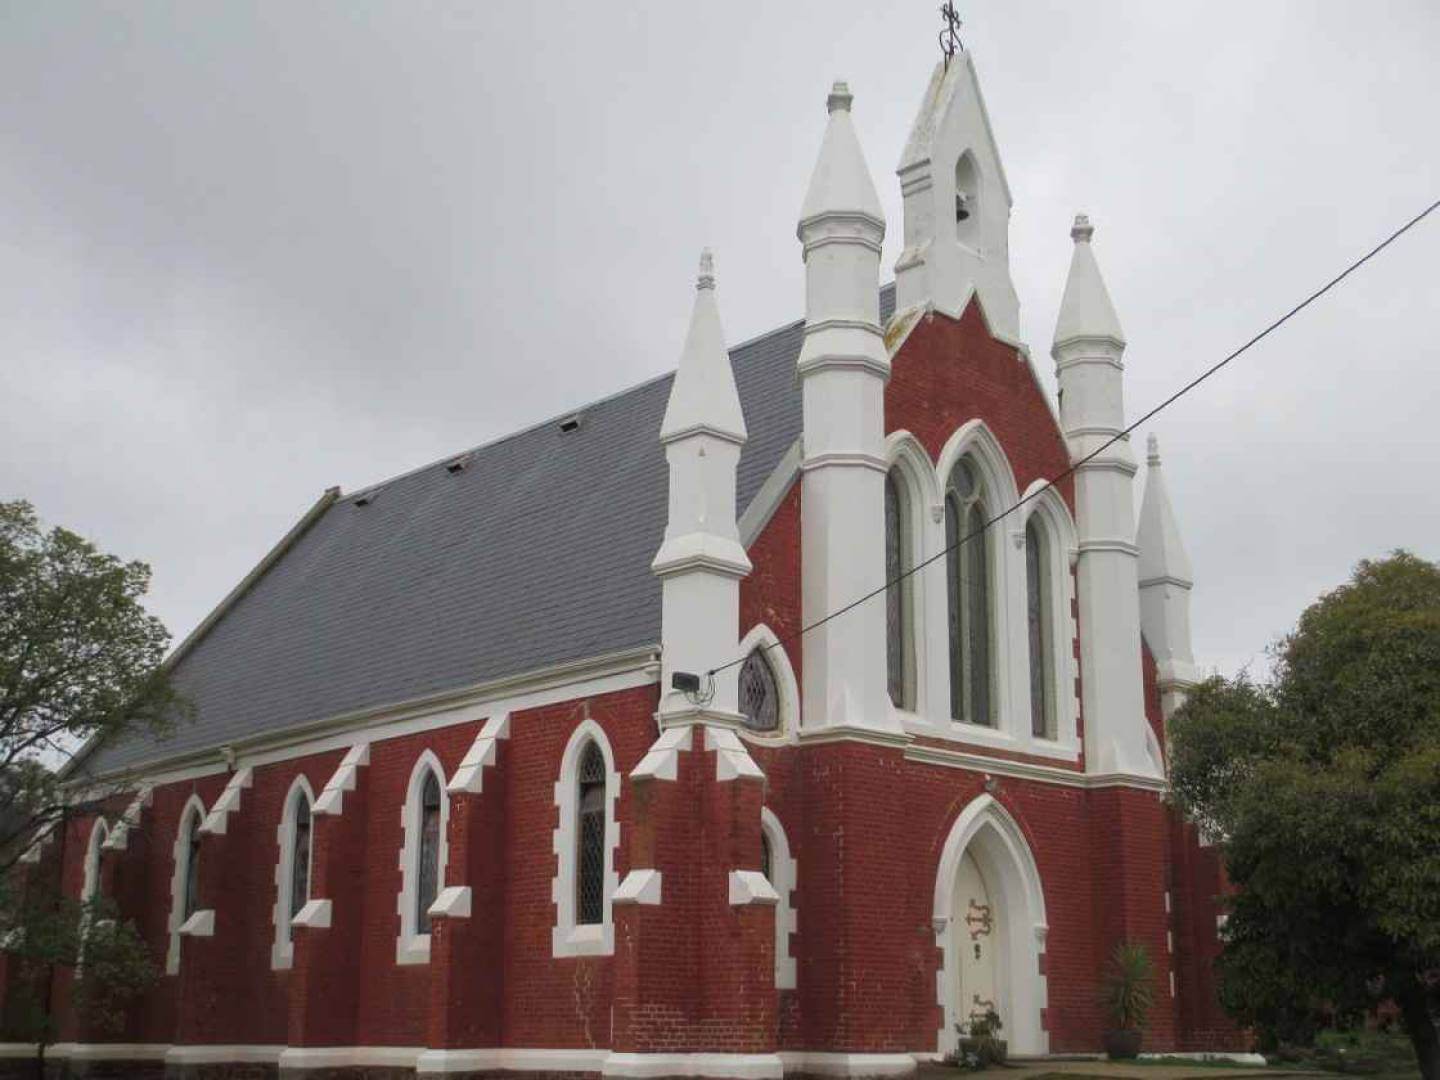 Maldon Uniting Church - Former